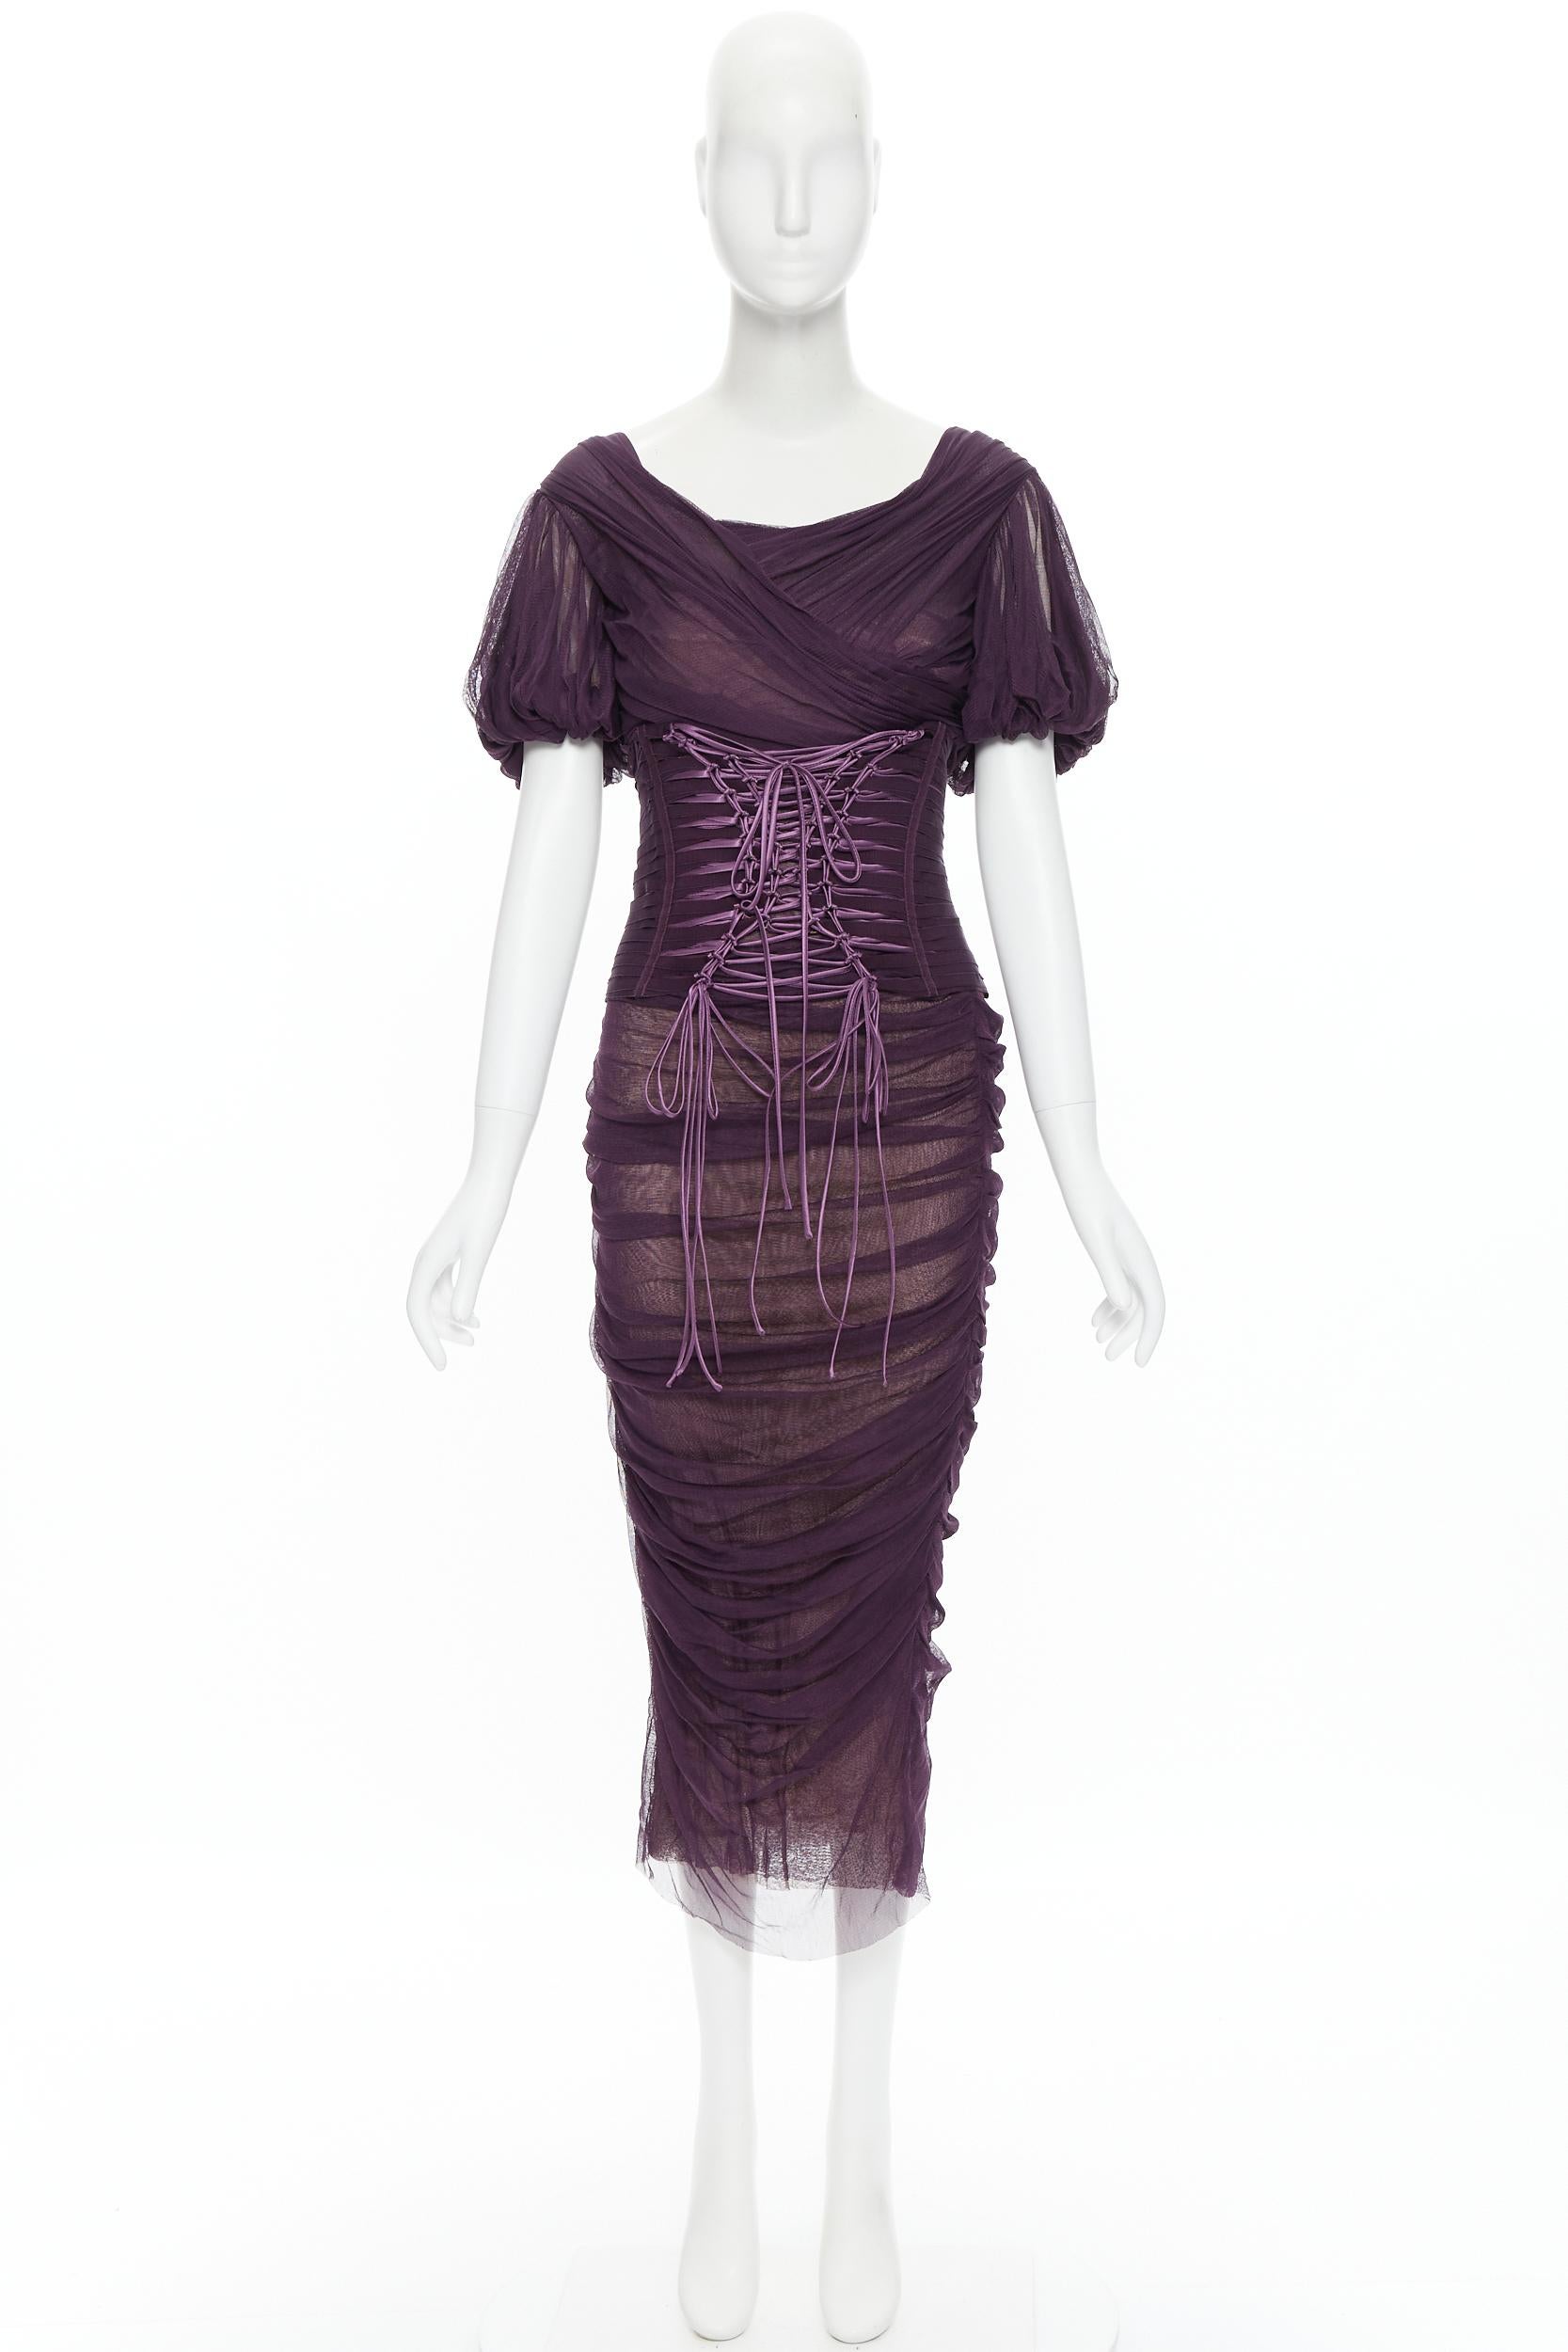 new DOLCE GABBANA Runway 2014 purple laced corset ruched silk dress IT48 XL 6